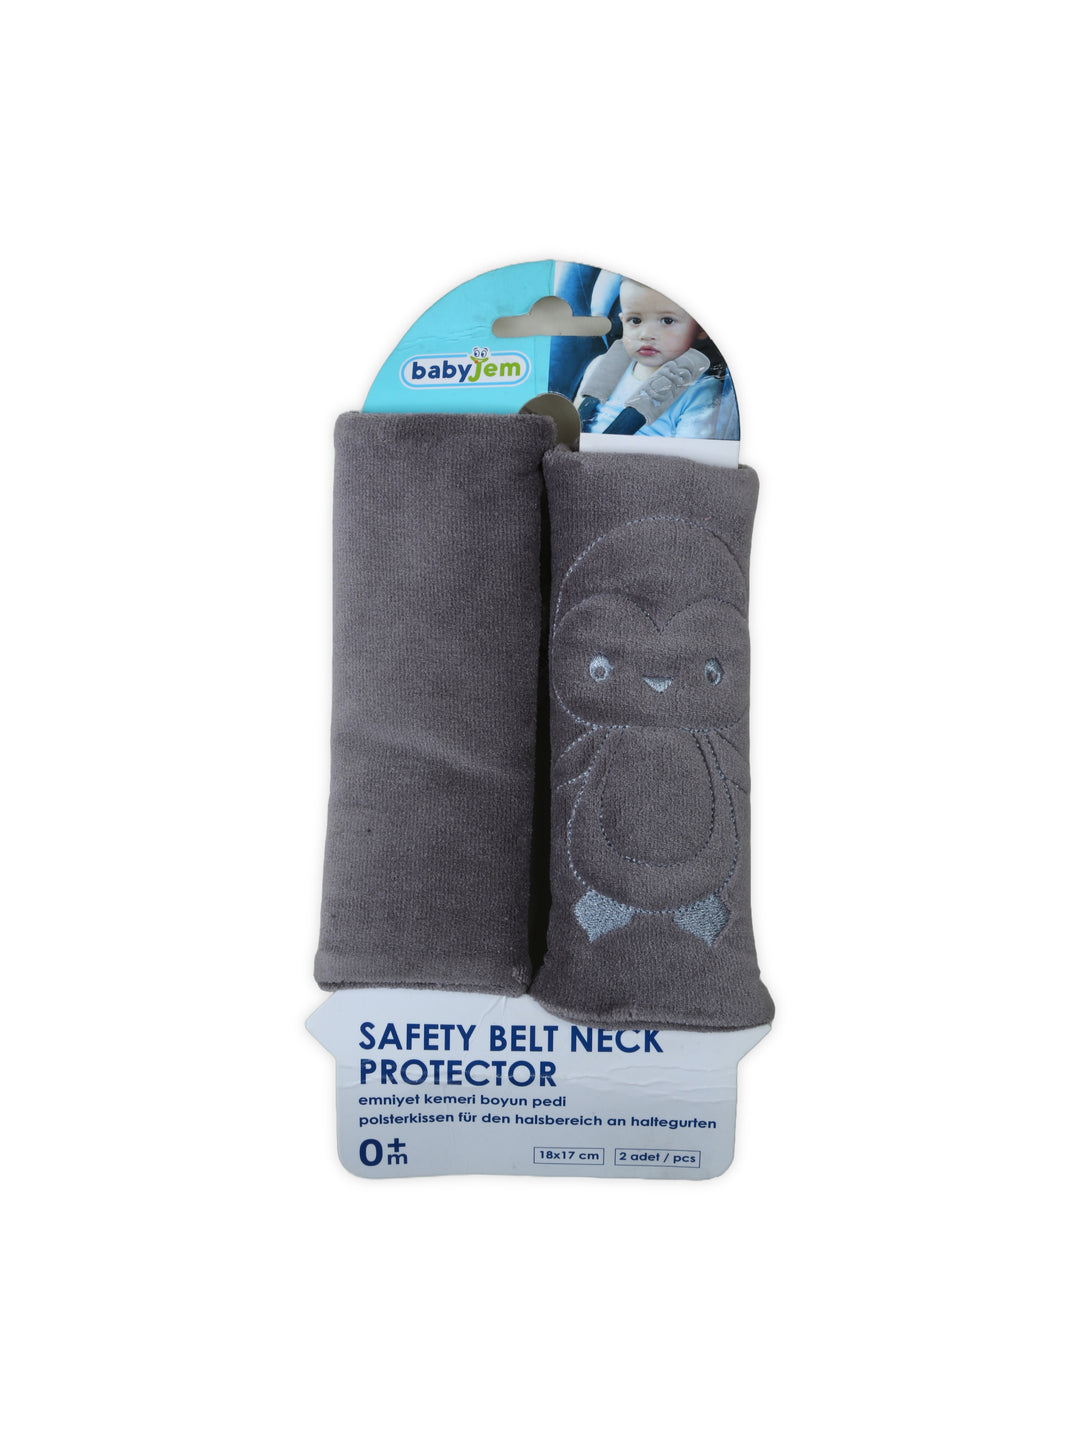 Baby Jem Baby Safety Belt Neck Protector #349 (W-22)